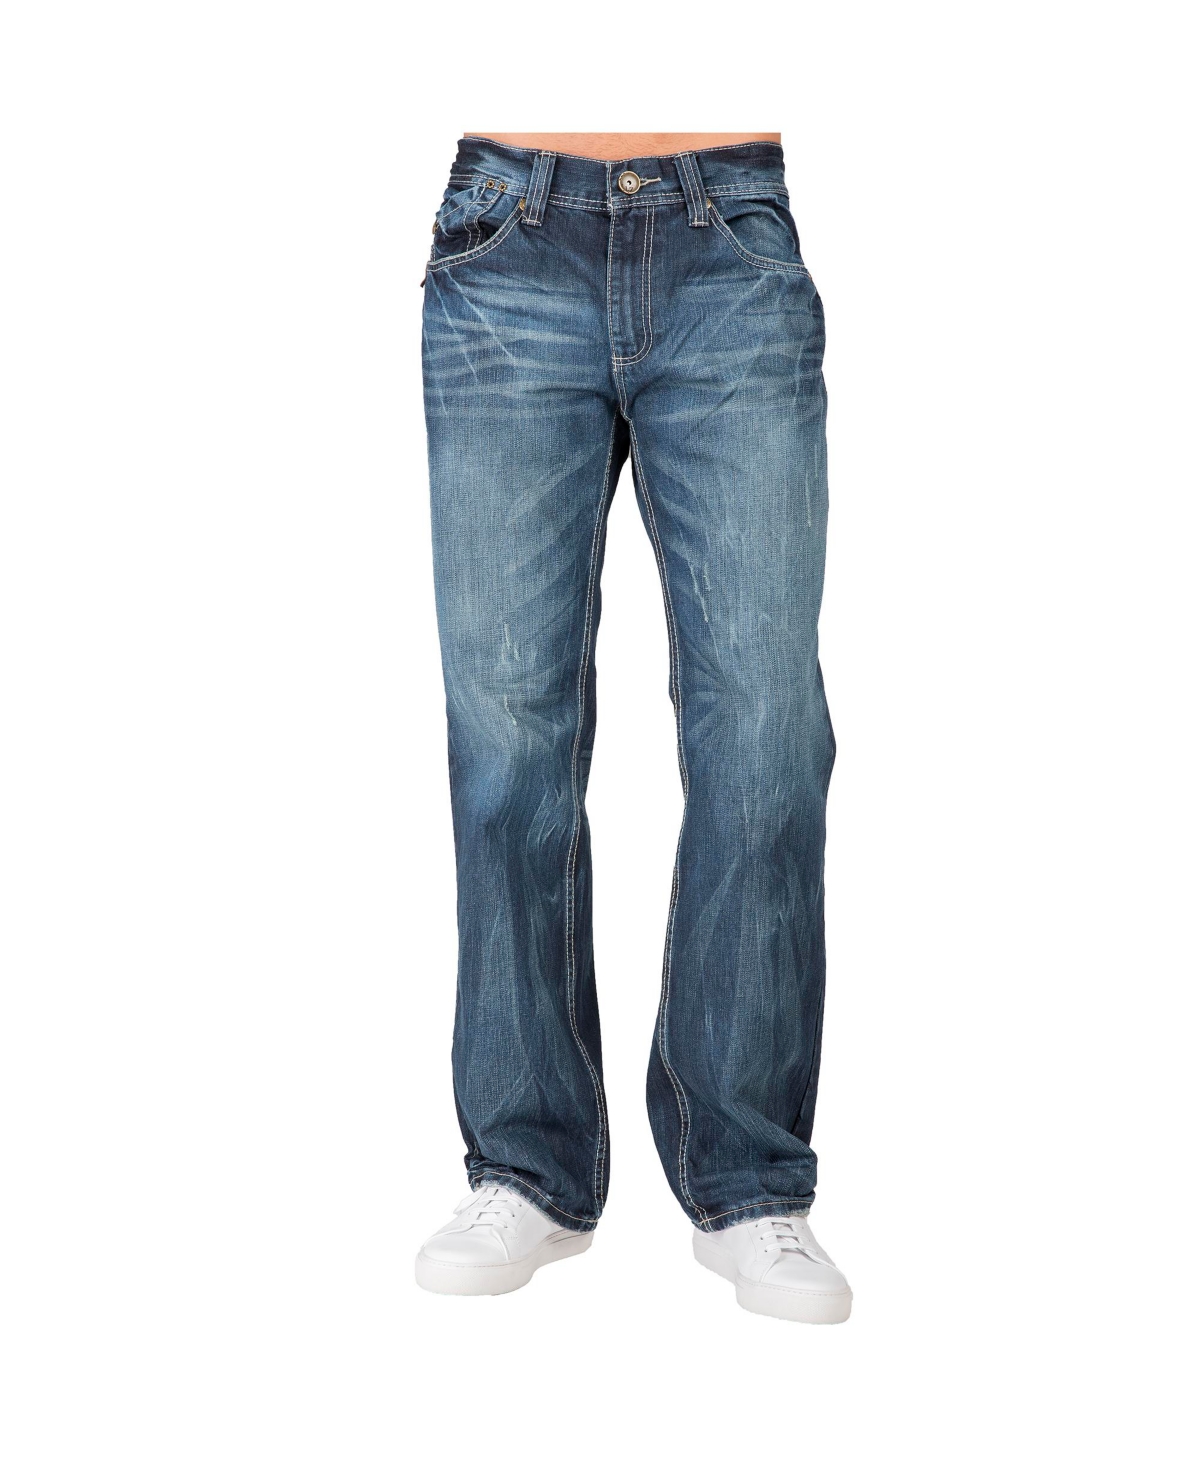 Men's Relaxed Straight Handcrafted Wash Premium Denim Signature Jeans - Medium blue paint